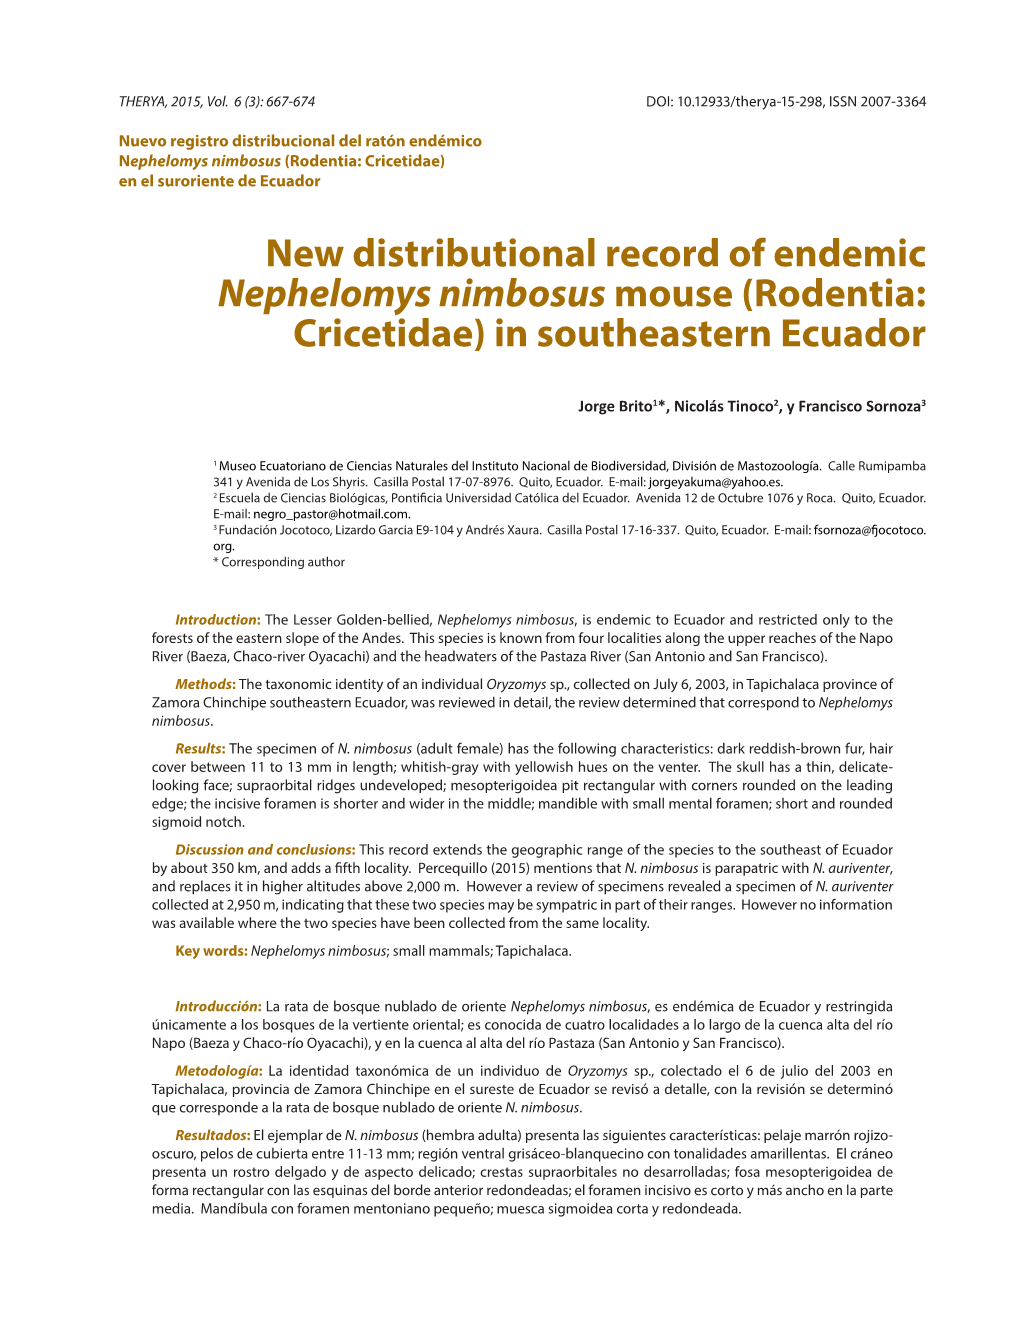 New Distributional Record of Endemic Nephelomys Nimbosus Mouse (Rodentia: Cricetidae) in Southeastern Ecuador